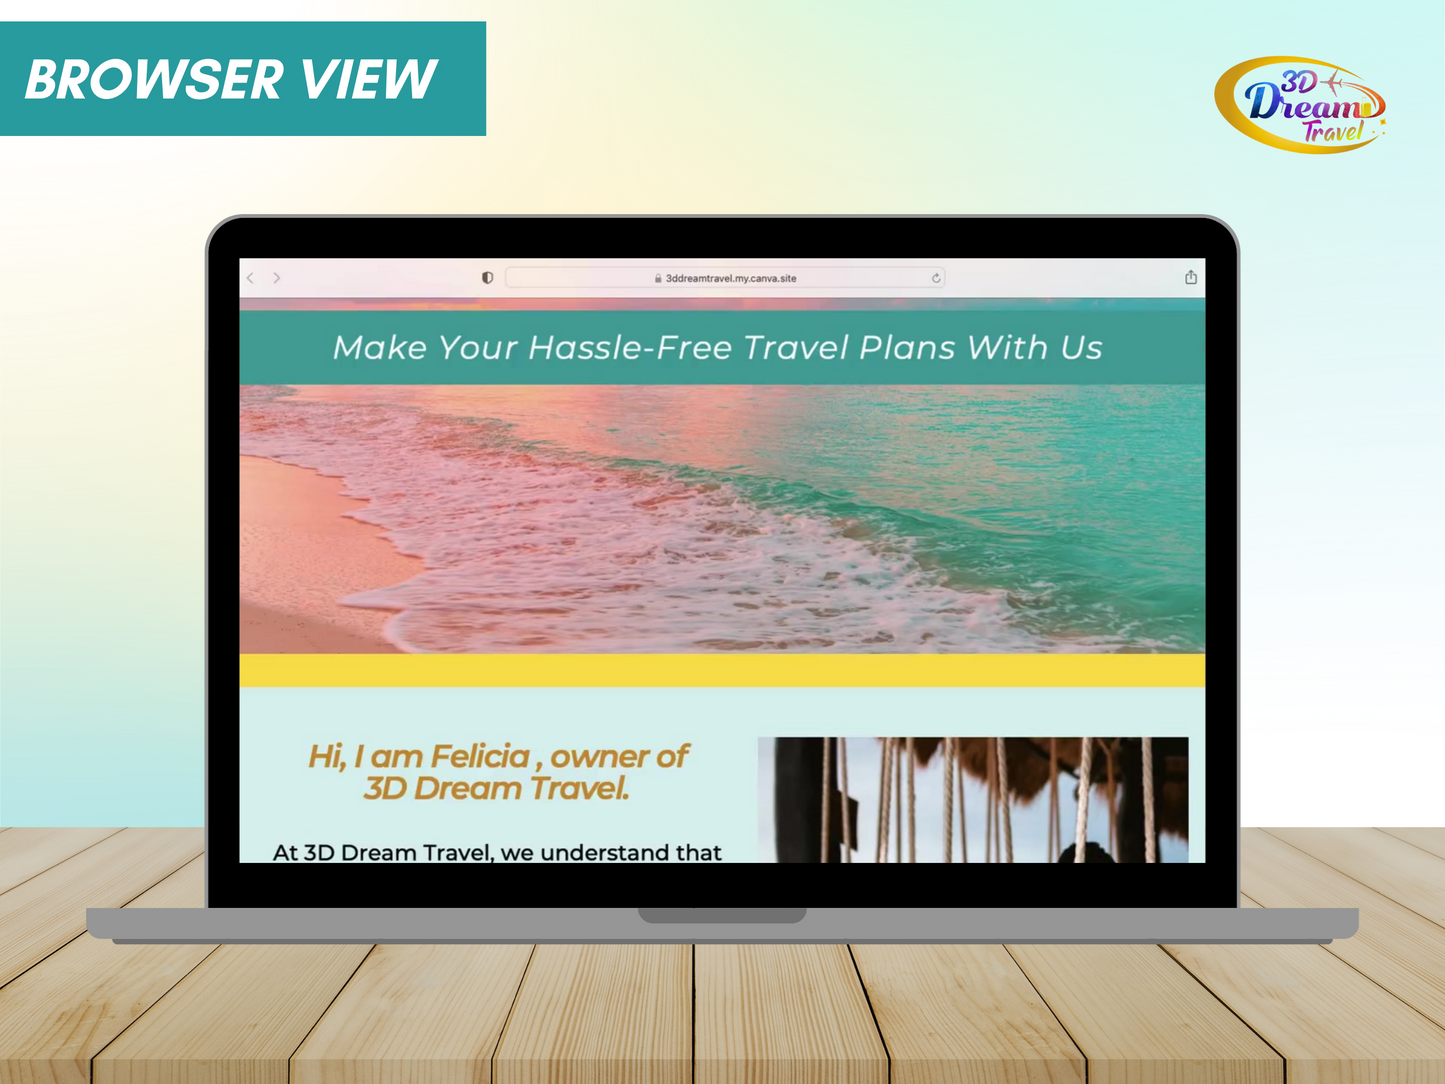 Travel Website Design 8